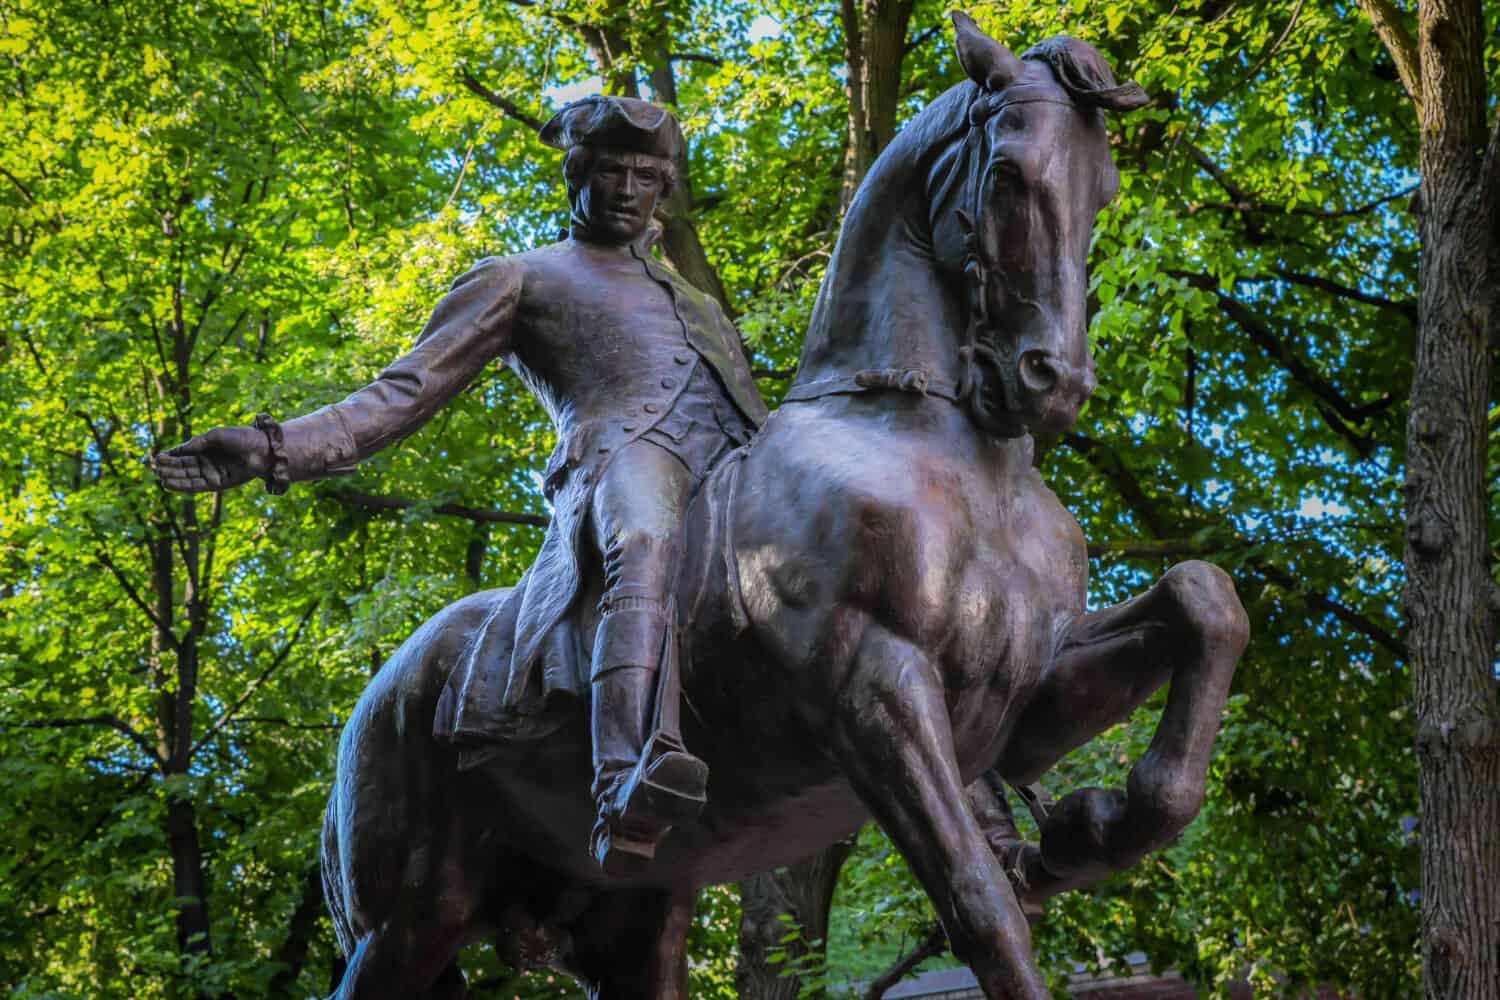 A statue commemorating Paul Revere's midnight ride.